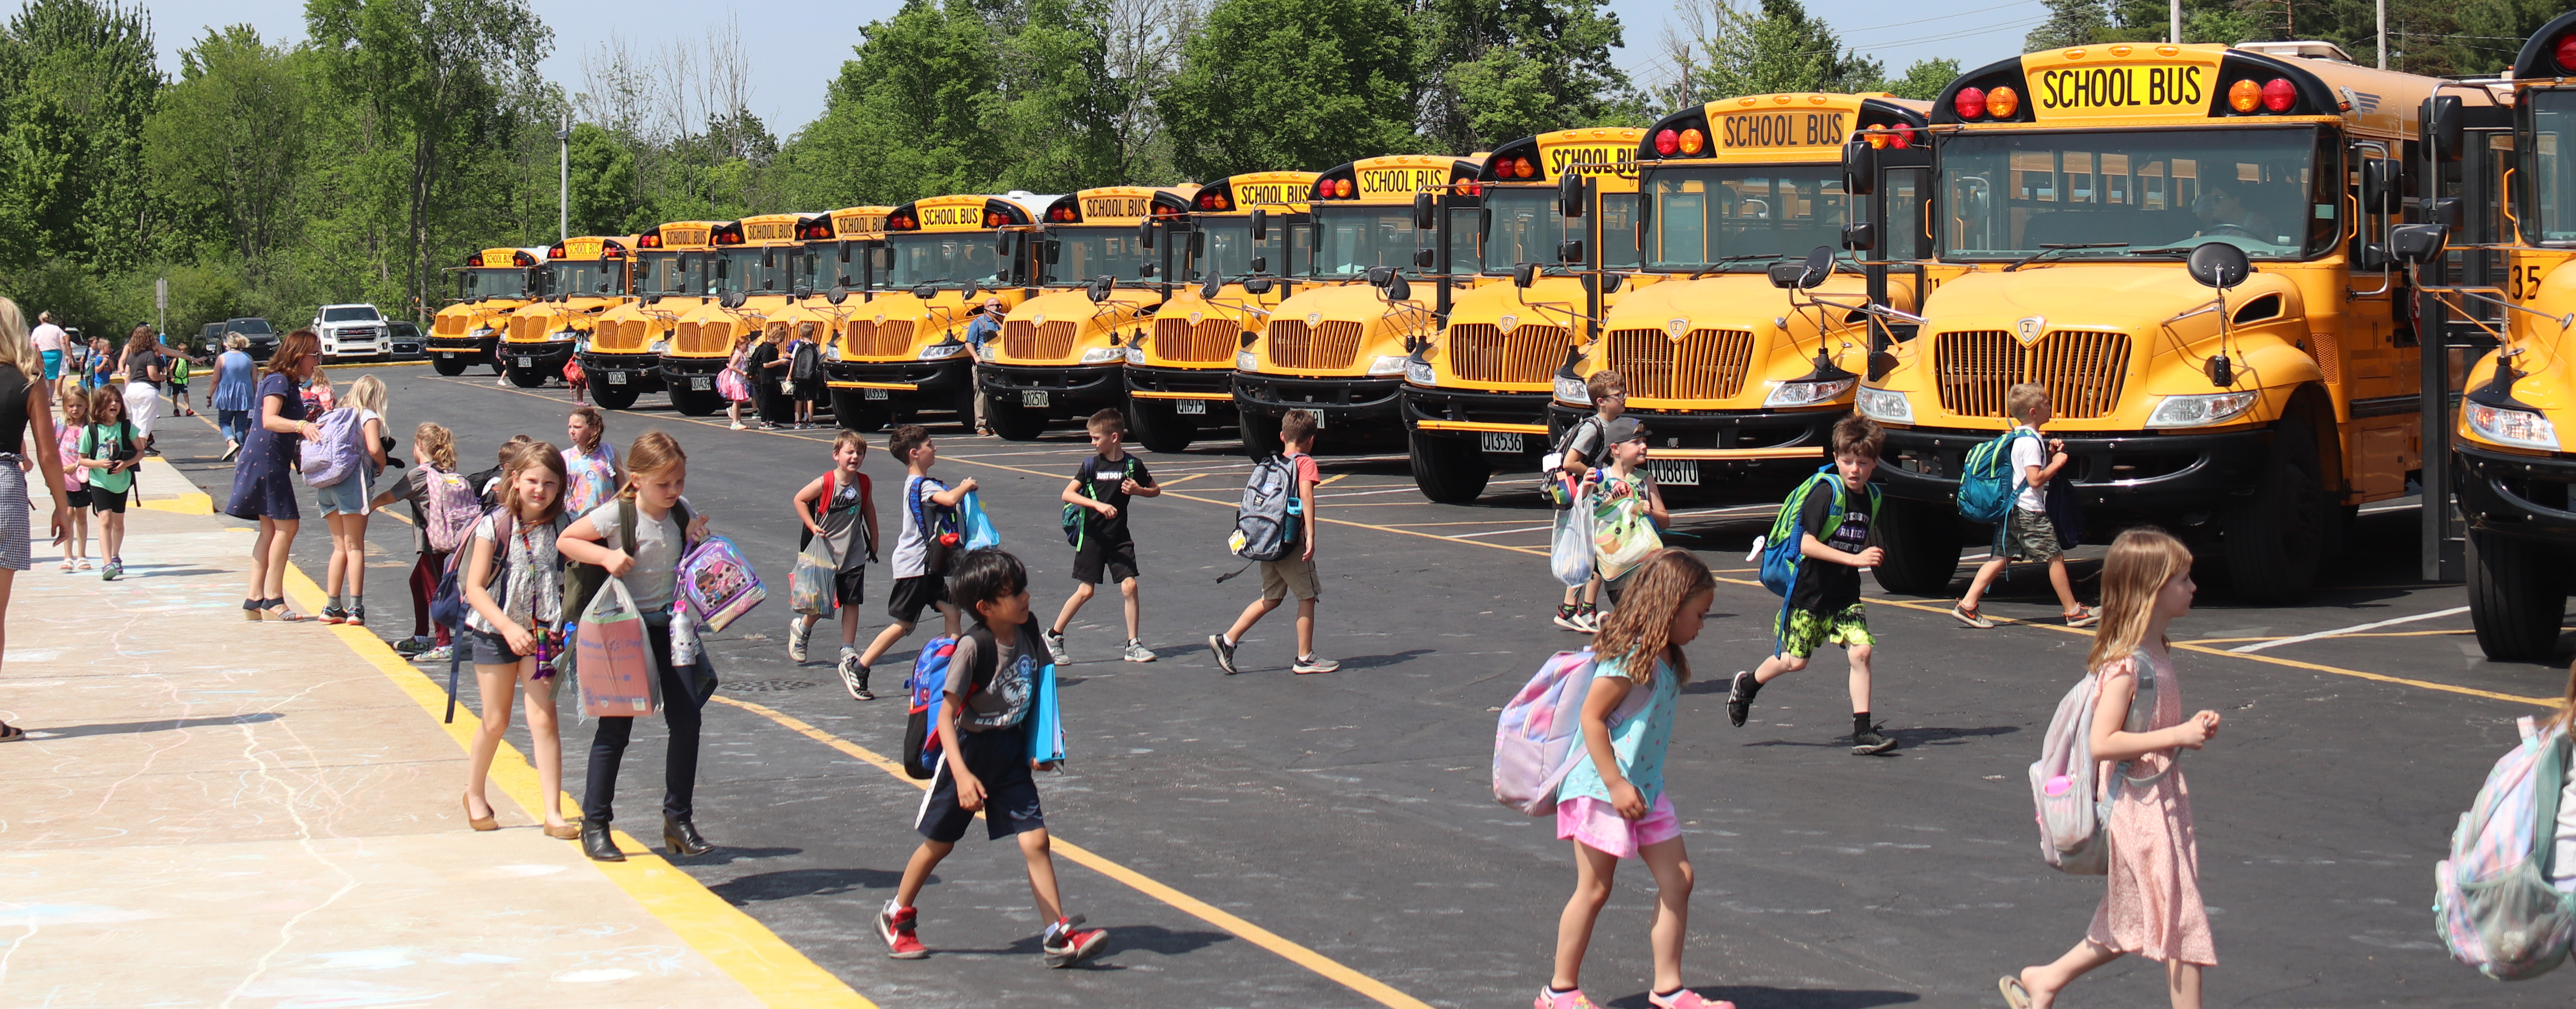 Students boarding school busses